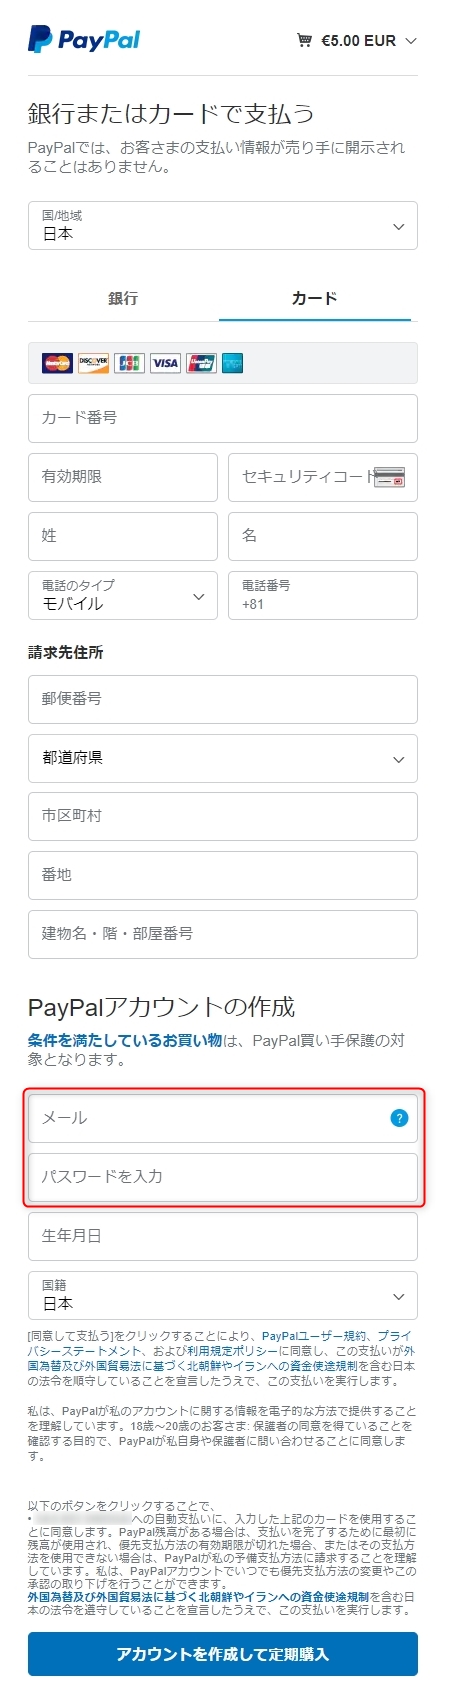 PayPal入力